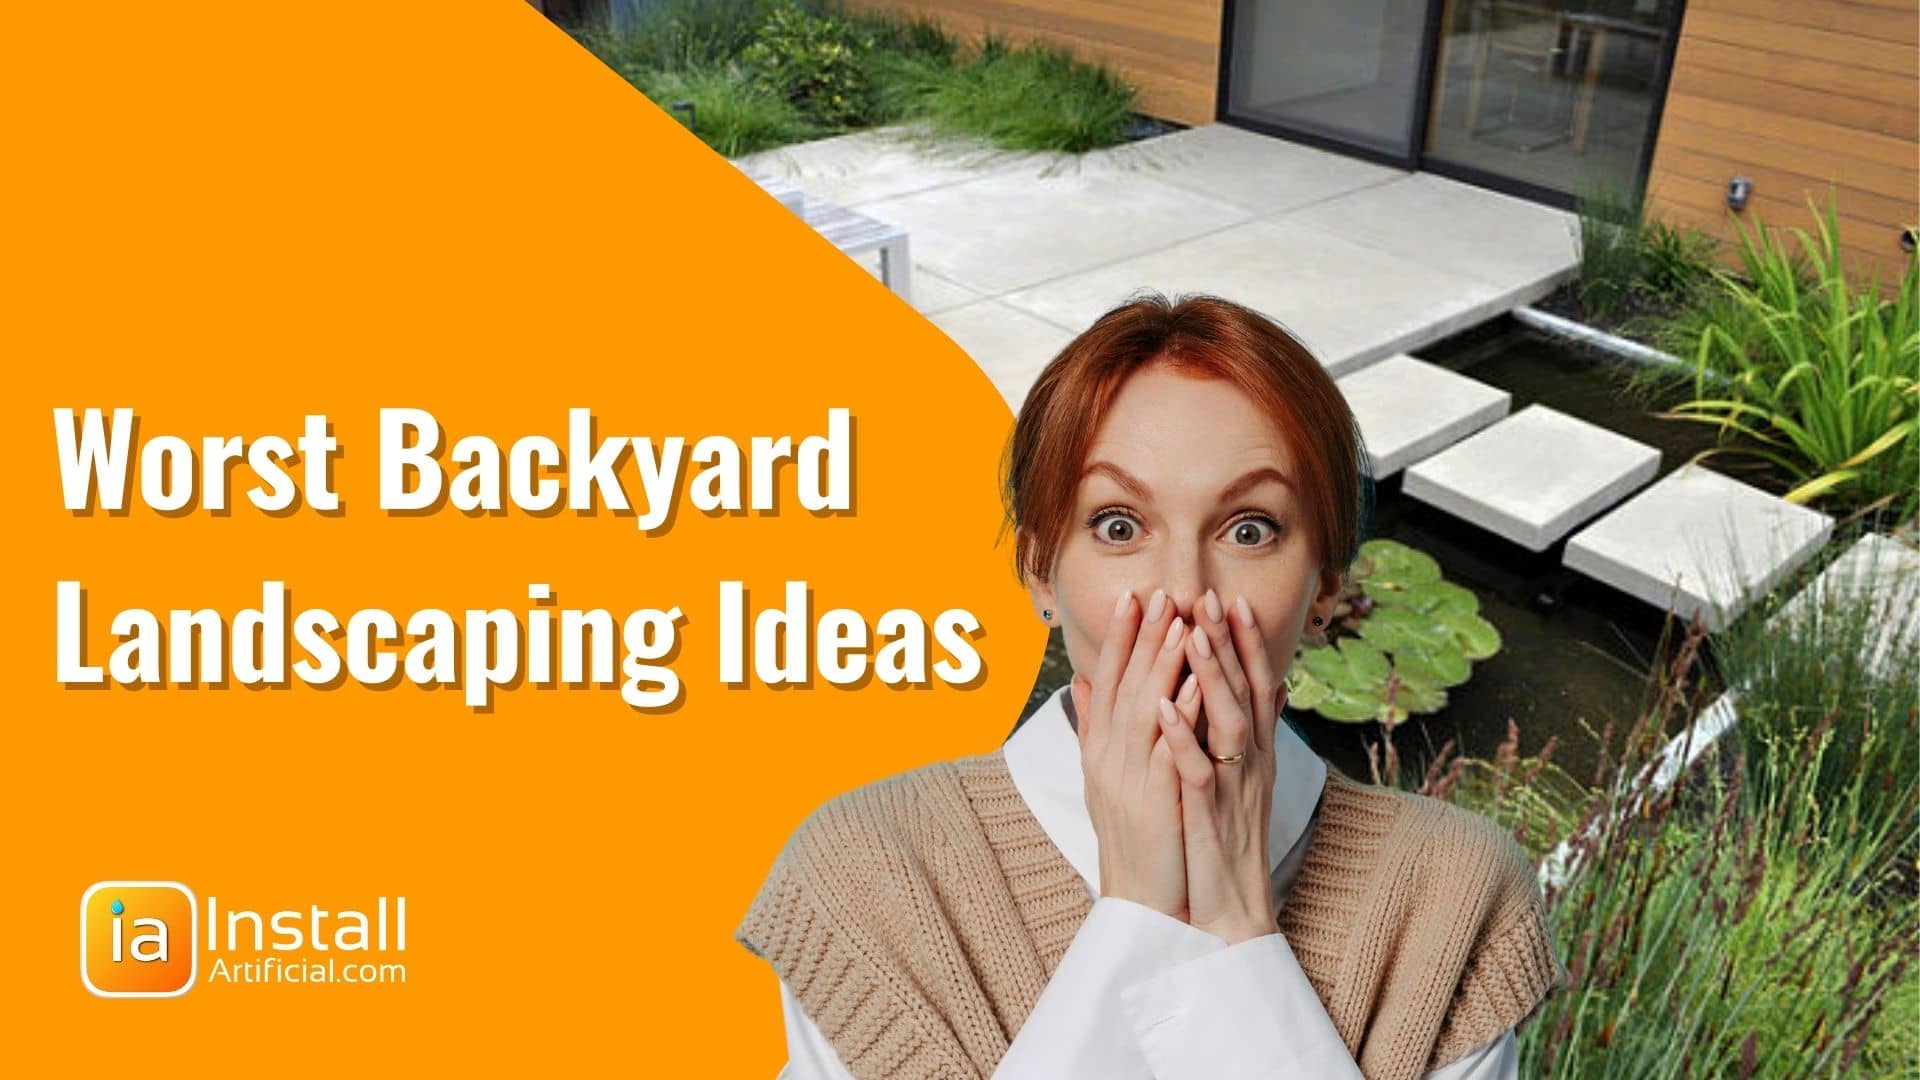 The Worst Backyard Landscaping Ideas